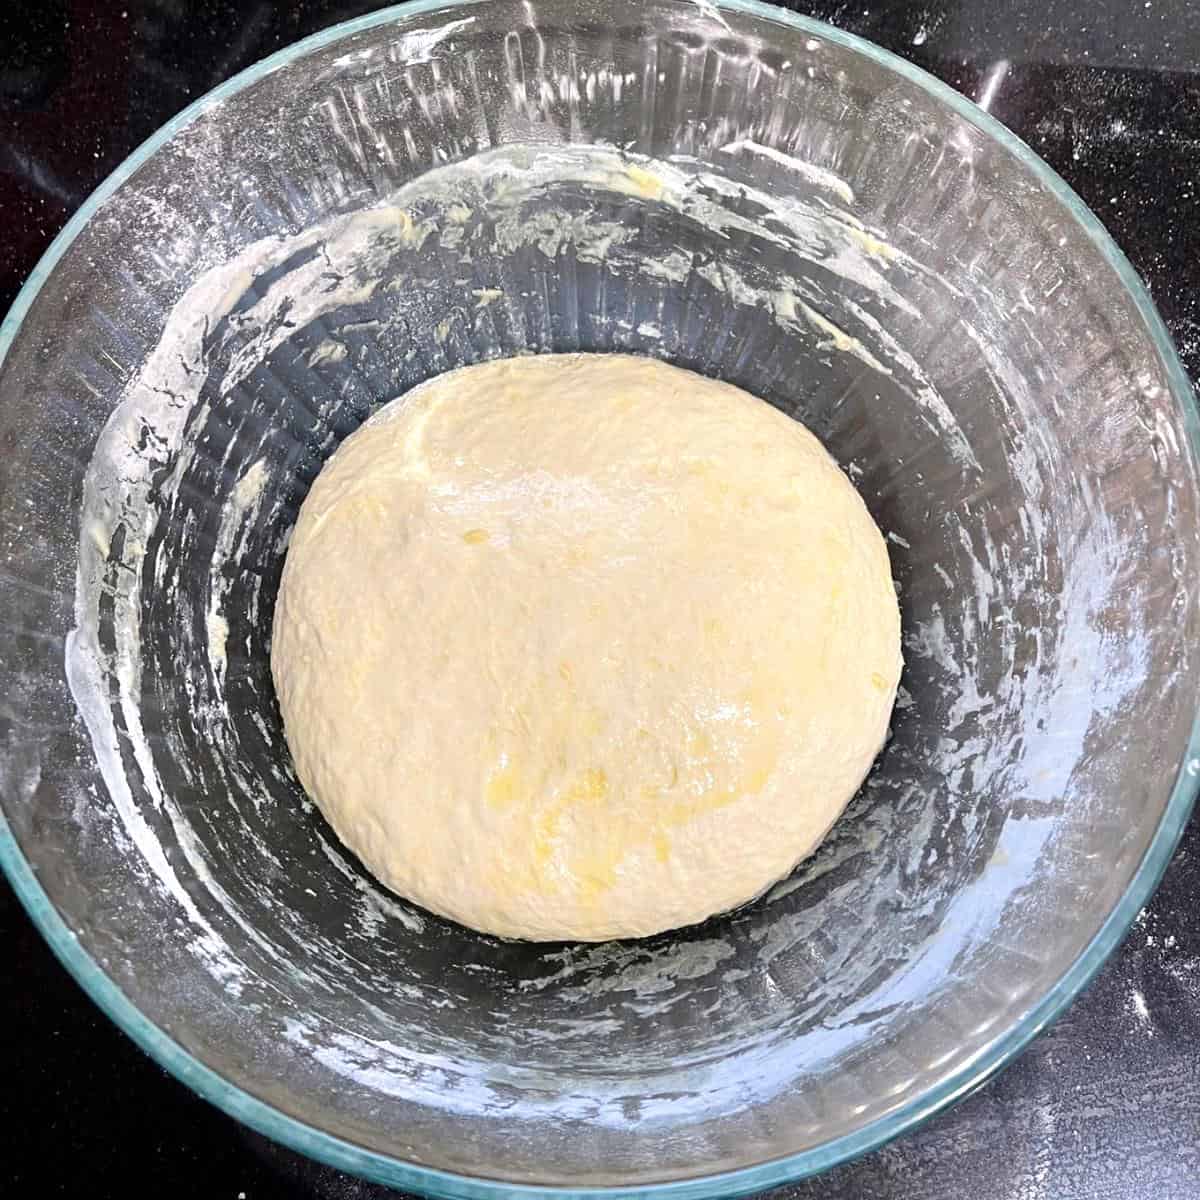 Italian bread dough in bowl before rising.